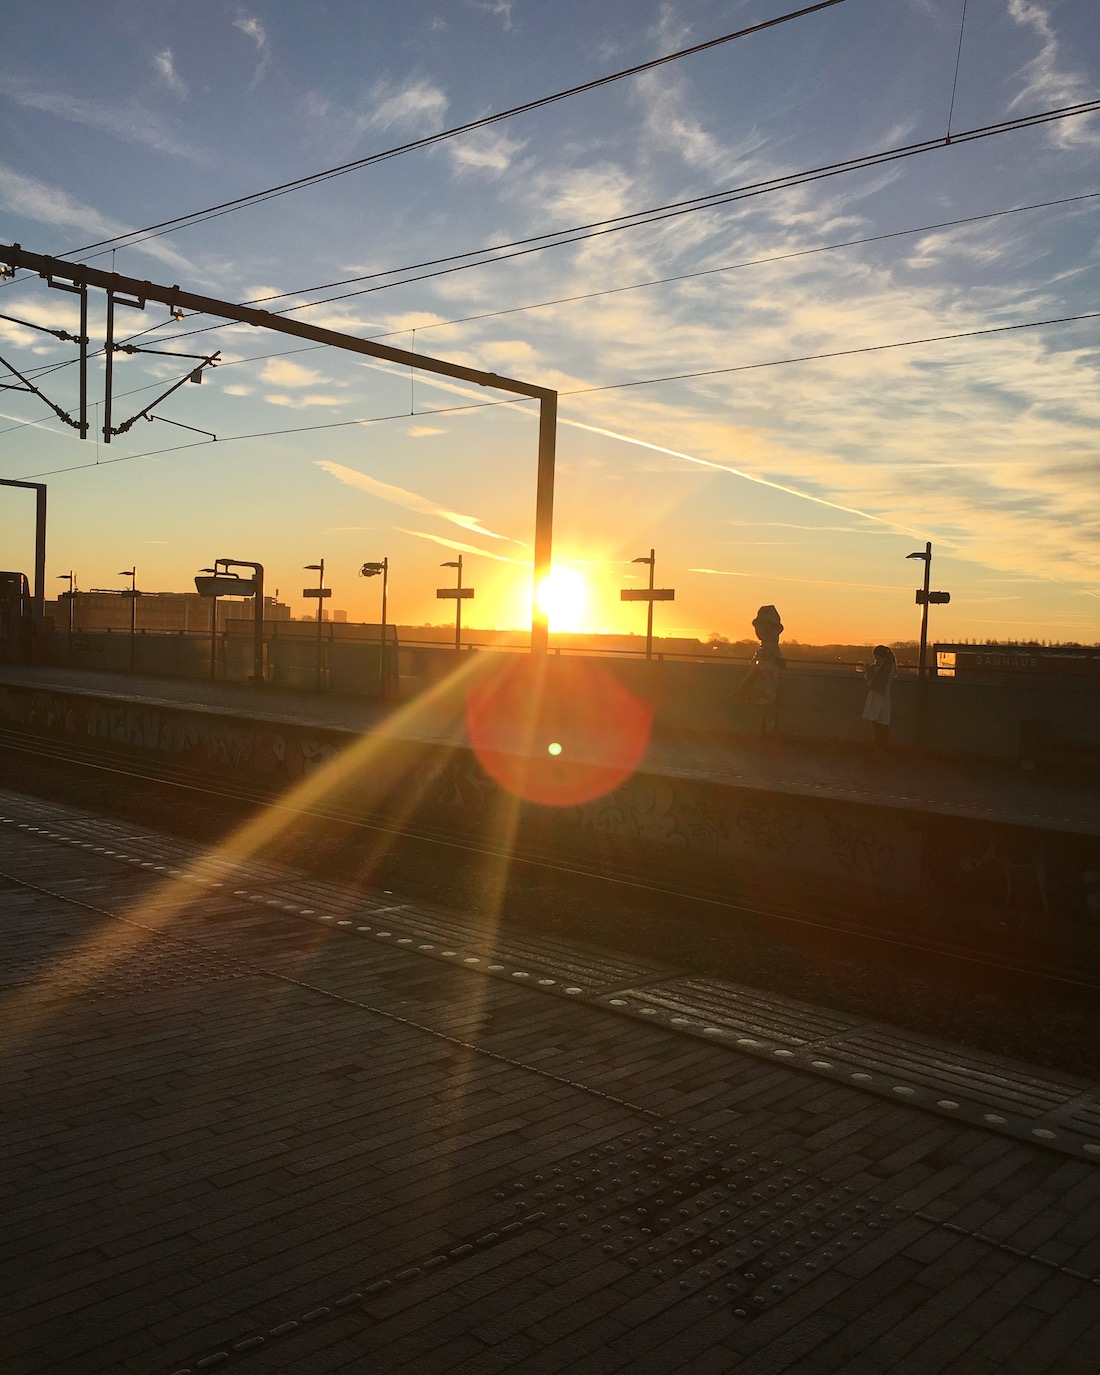 sunrise at ny ellebjerg station january 2019